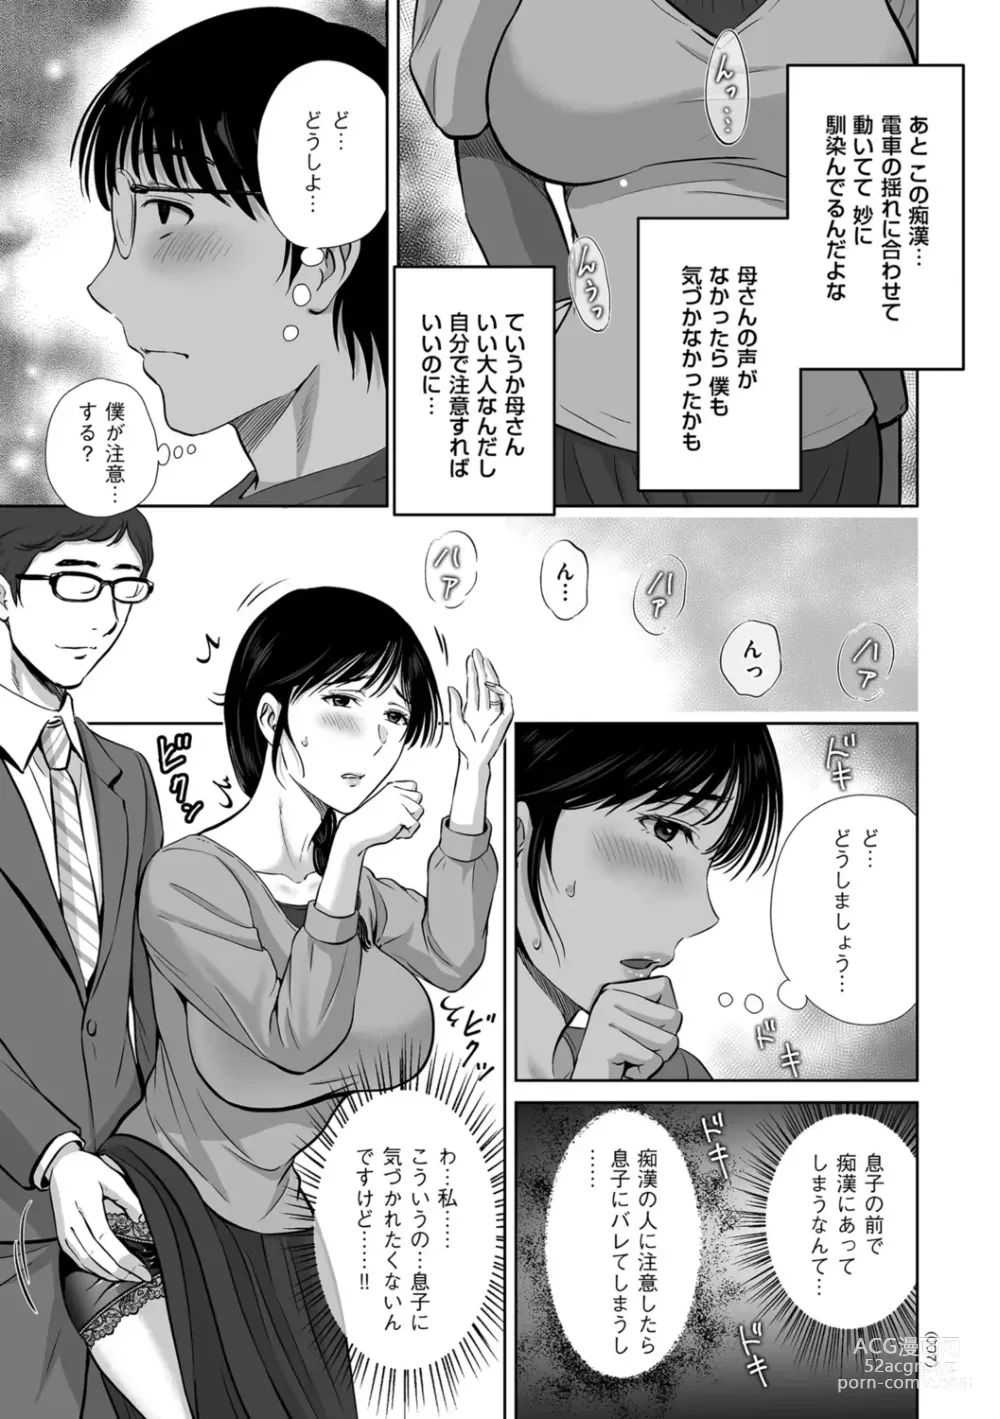 Page 7 of manga Mesuzakari no Haha-tachi e